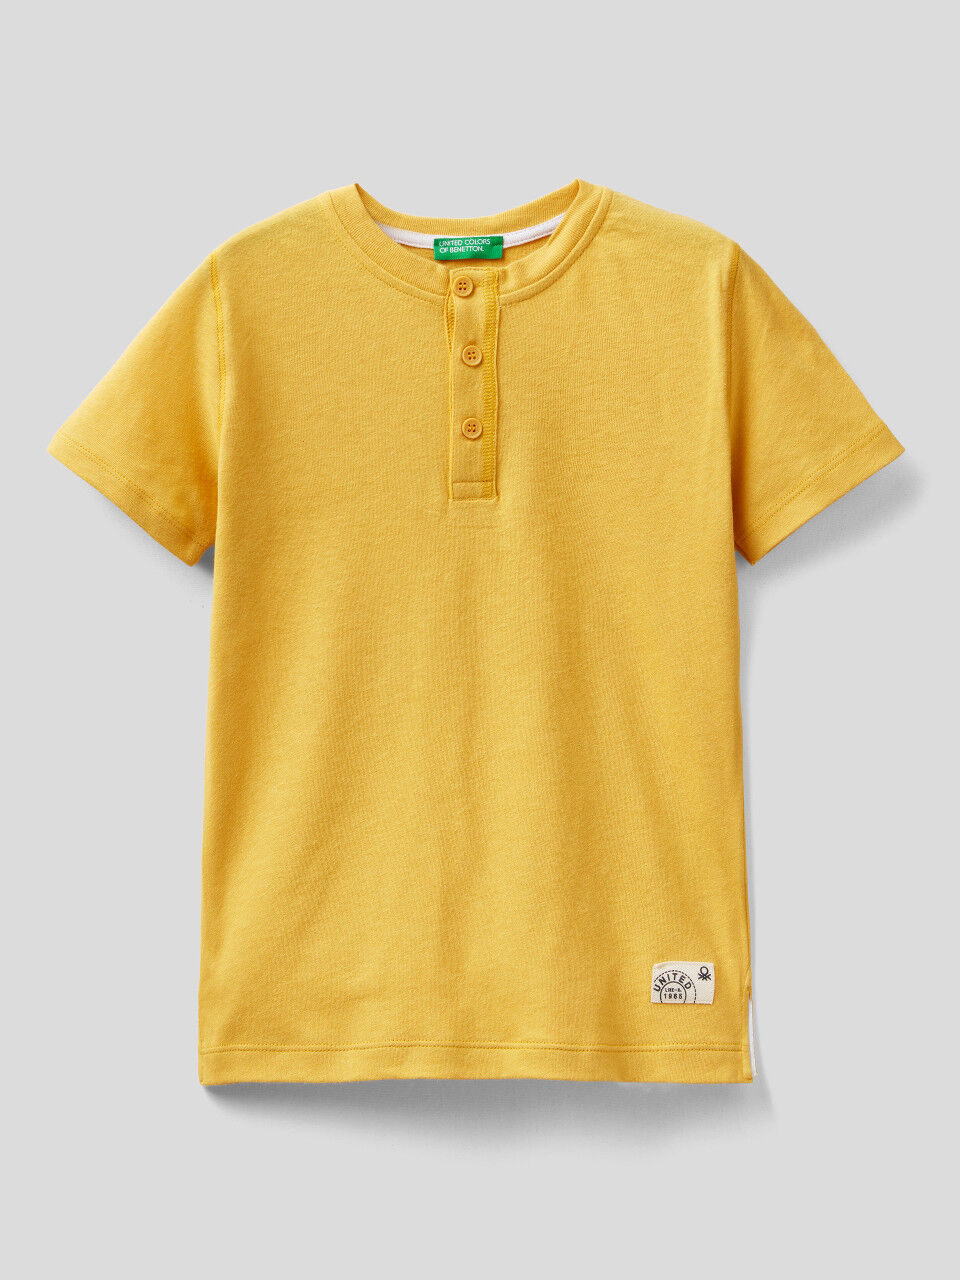 Latin visit Nationwide Junior Boys' Short Sleeve T-shirts Collection 2022 | Benetton